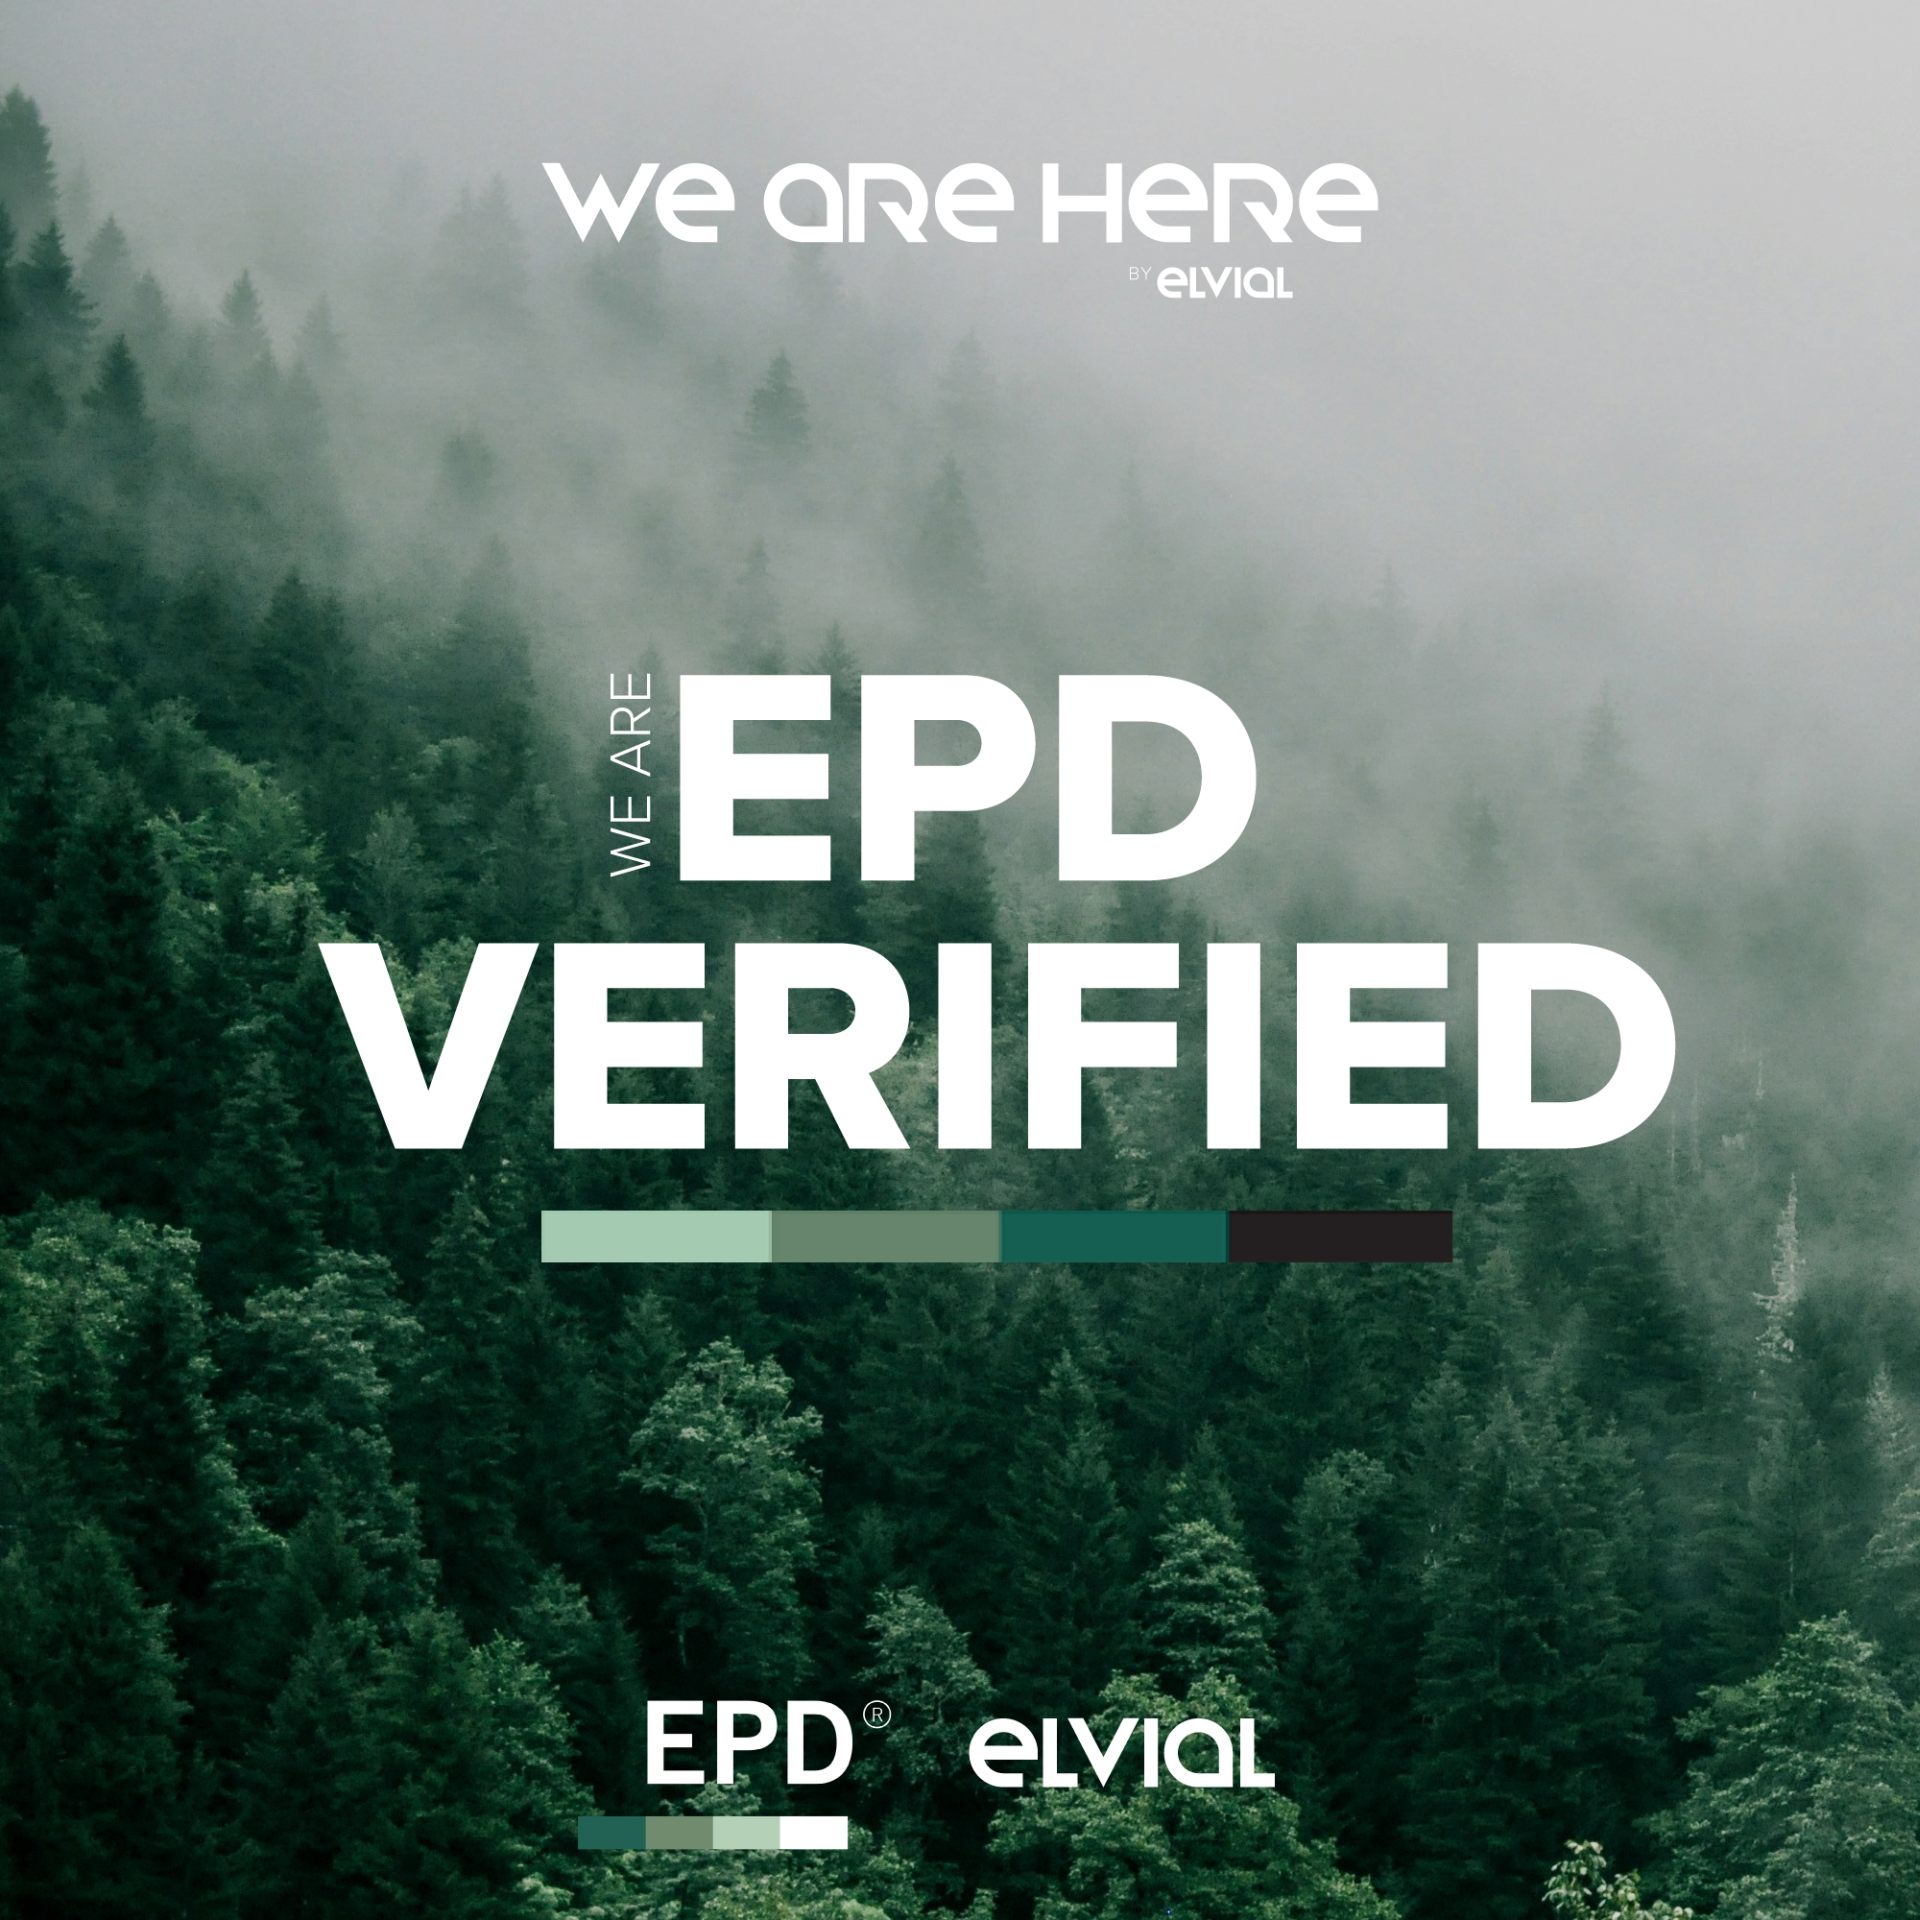 ELVIAL: Καλωσορίζει την πιστοποίηση EPD’s στα προϊόντα της